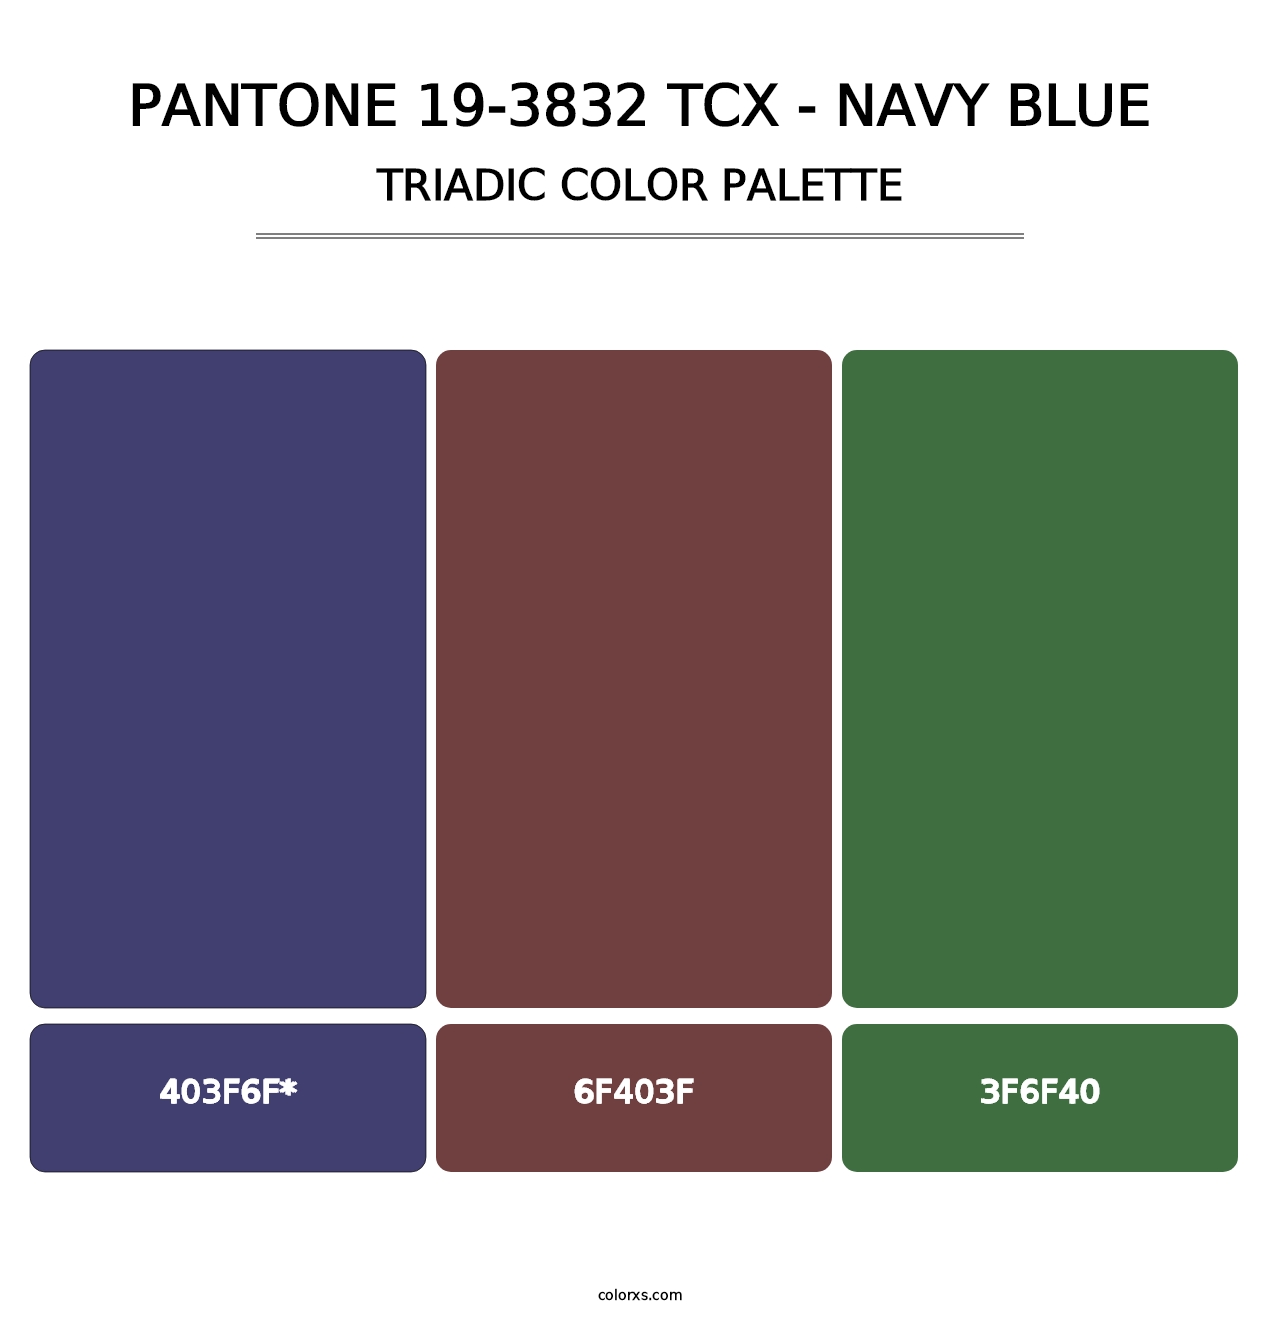 PANTONE 19-3832 TCX - Navy Blue - Triadic Color Palette